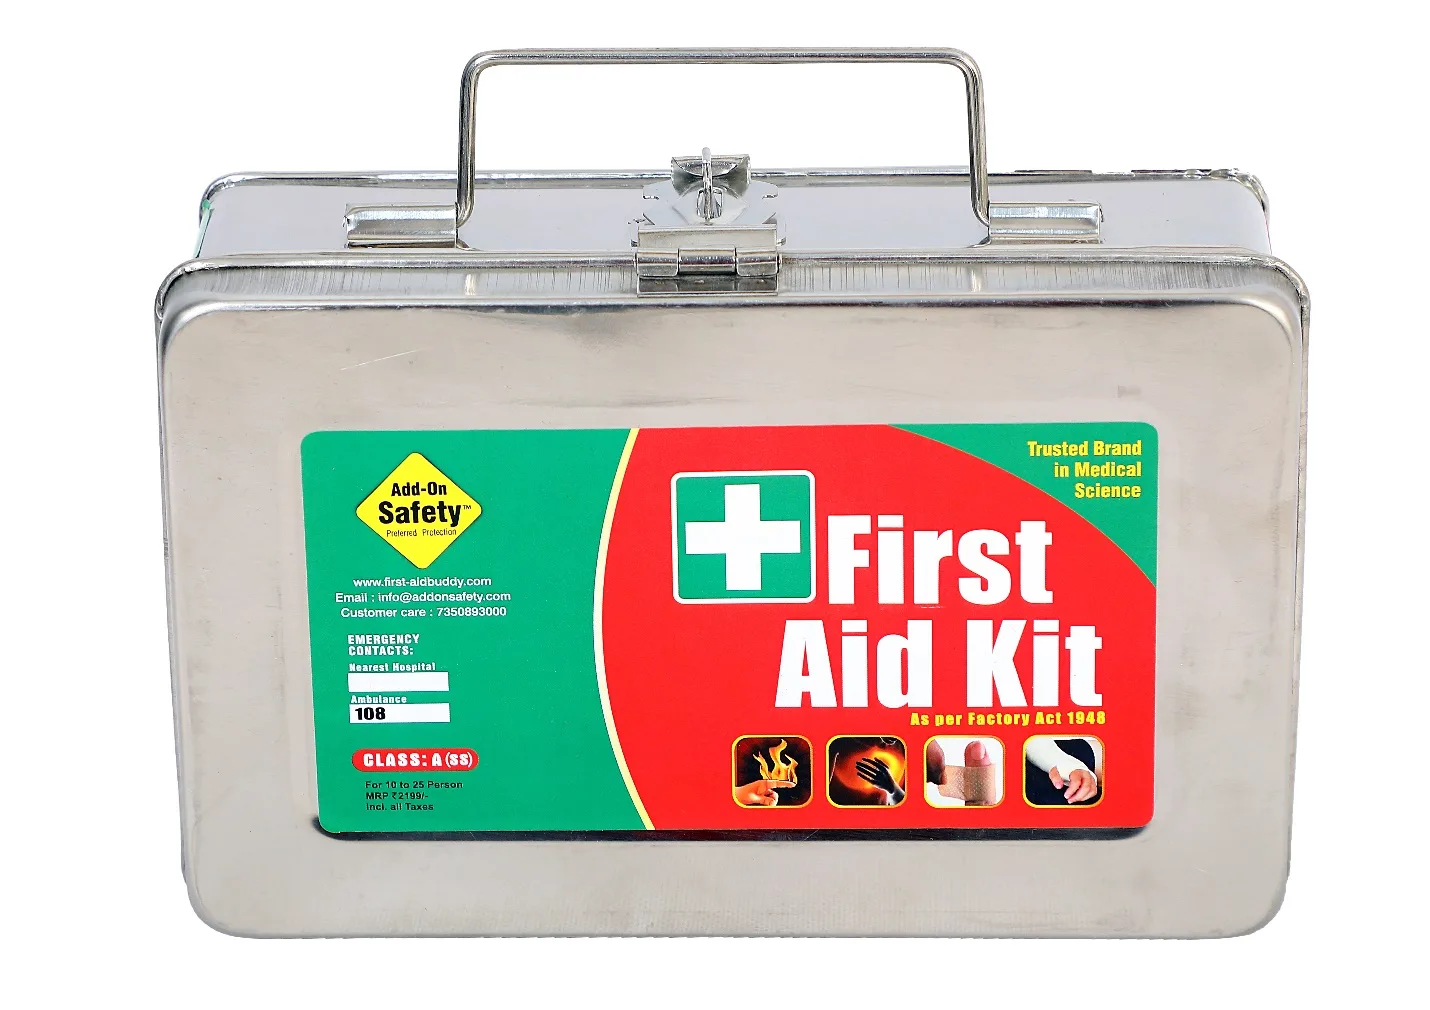 First Aid Kit Class A(SS)